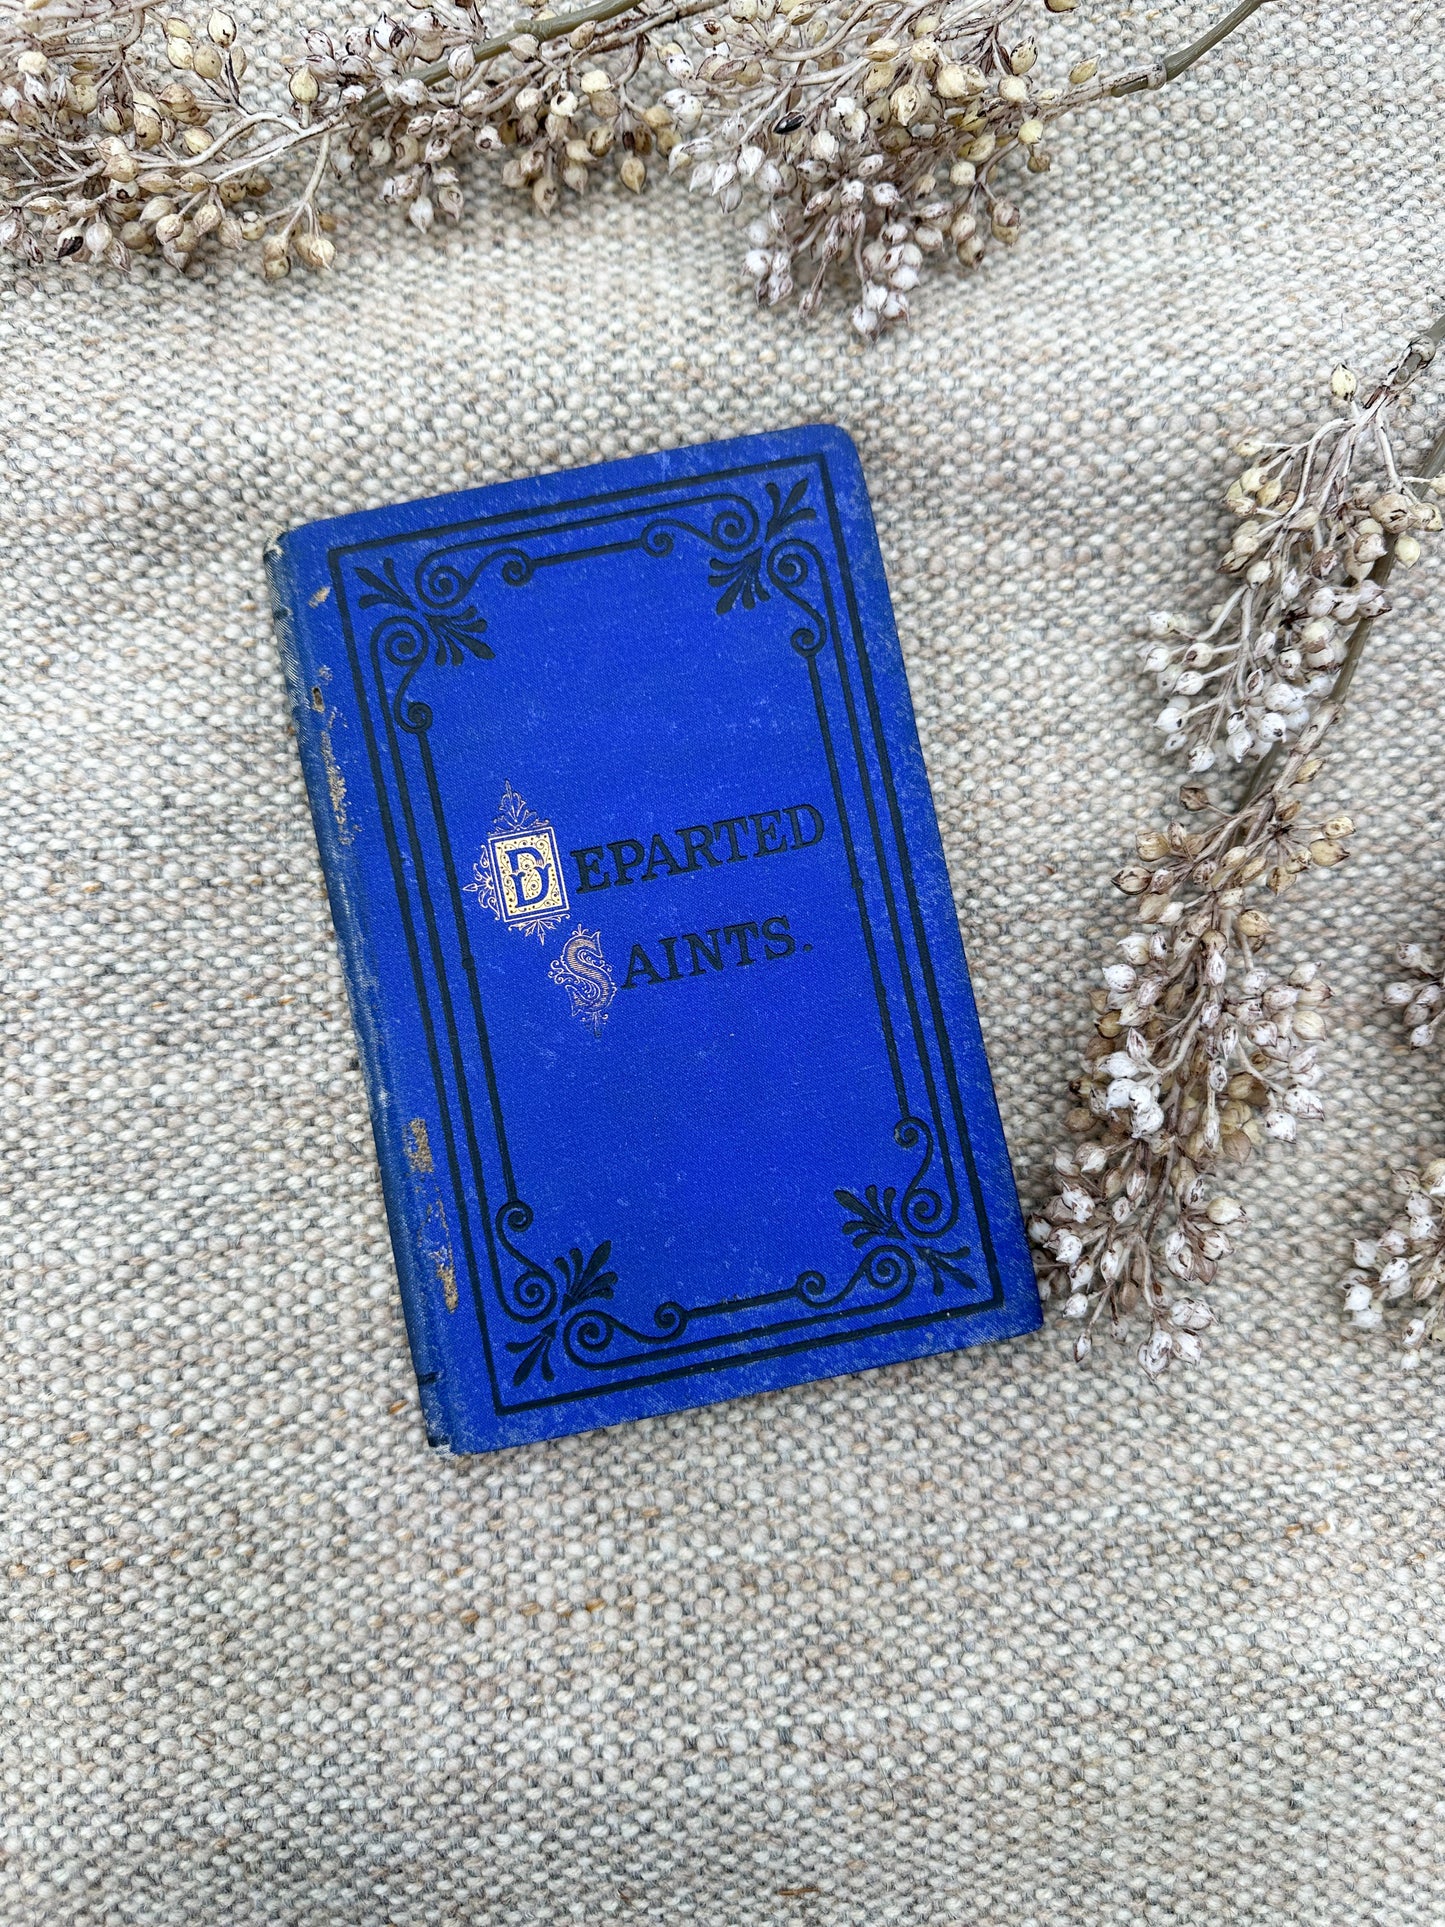 Vintage Book- Departed Saints